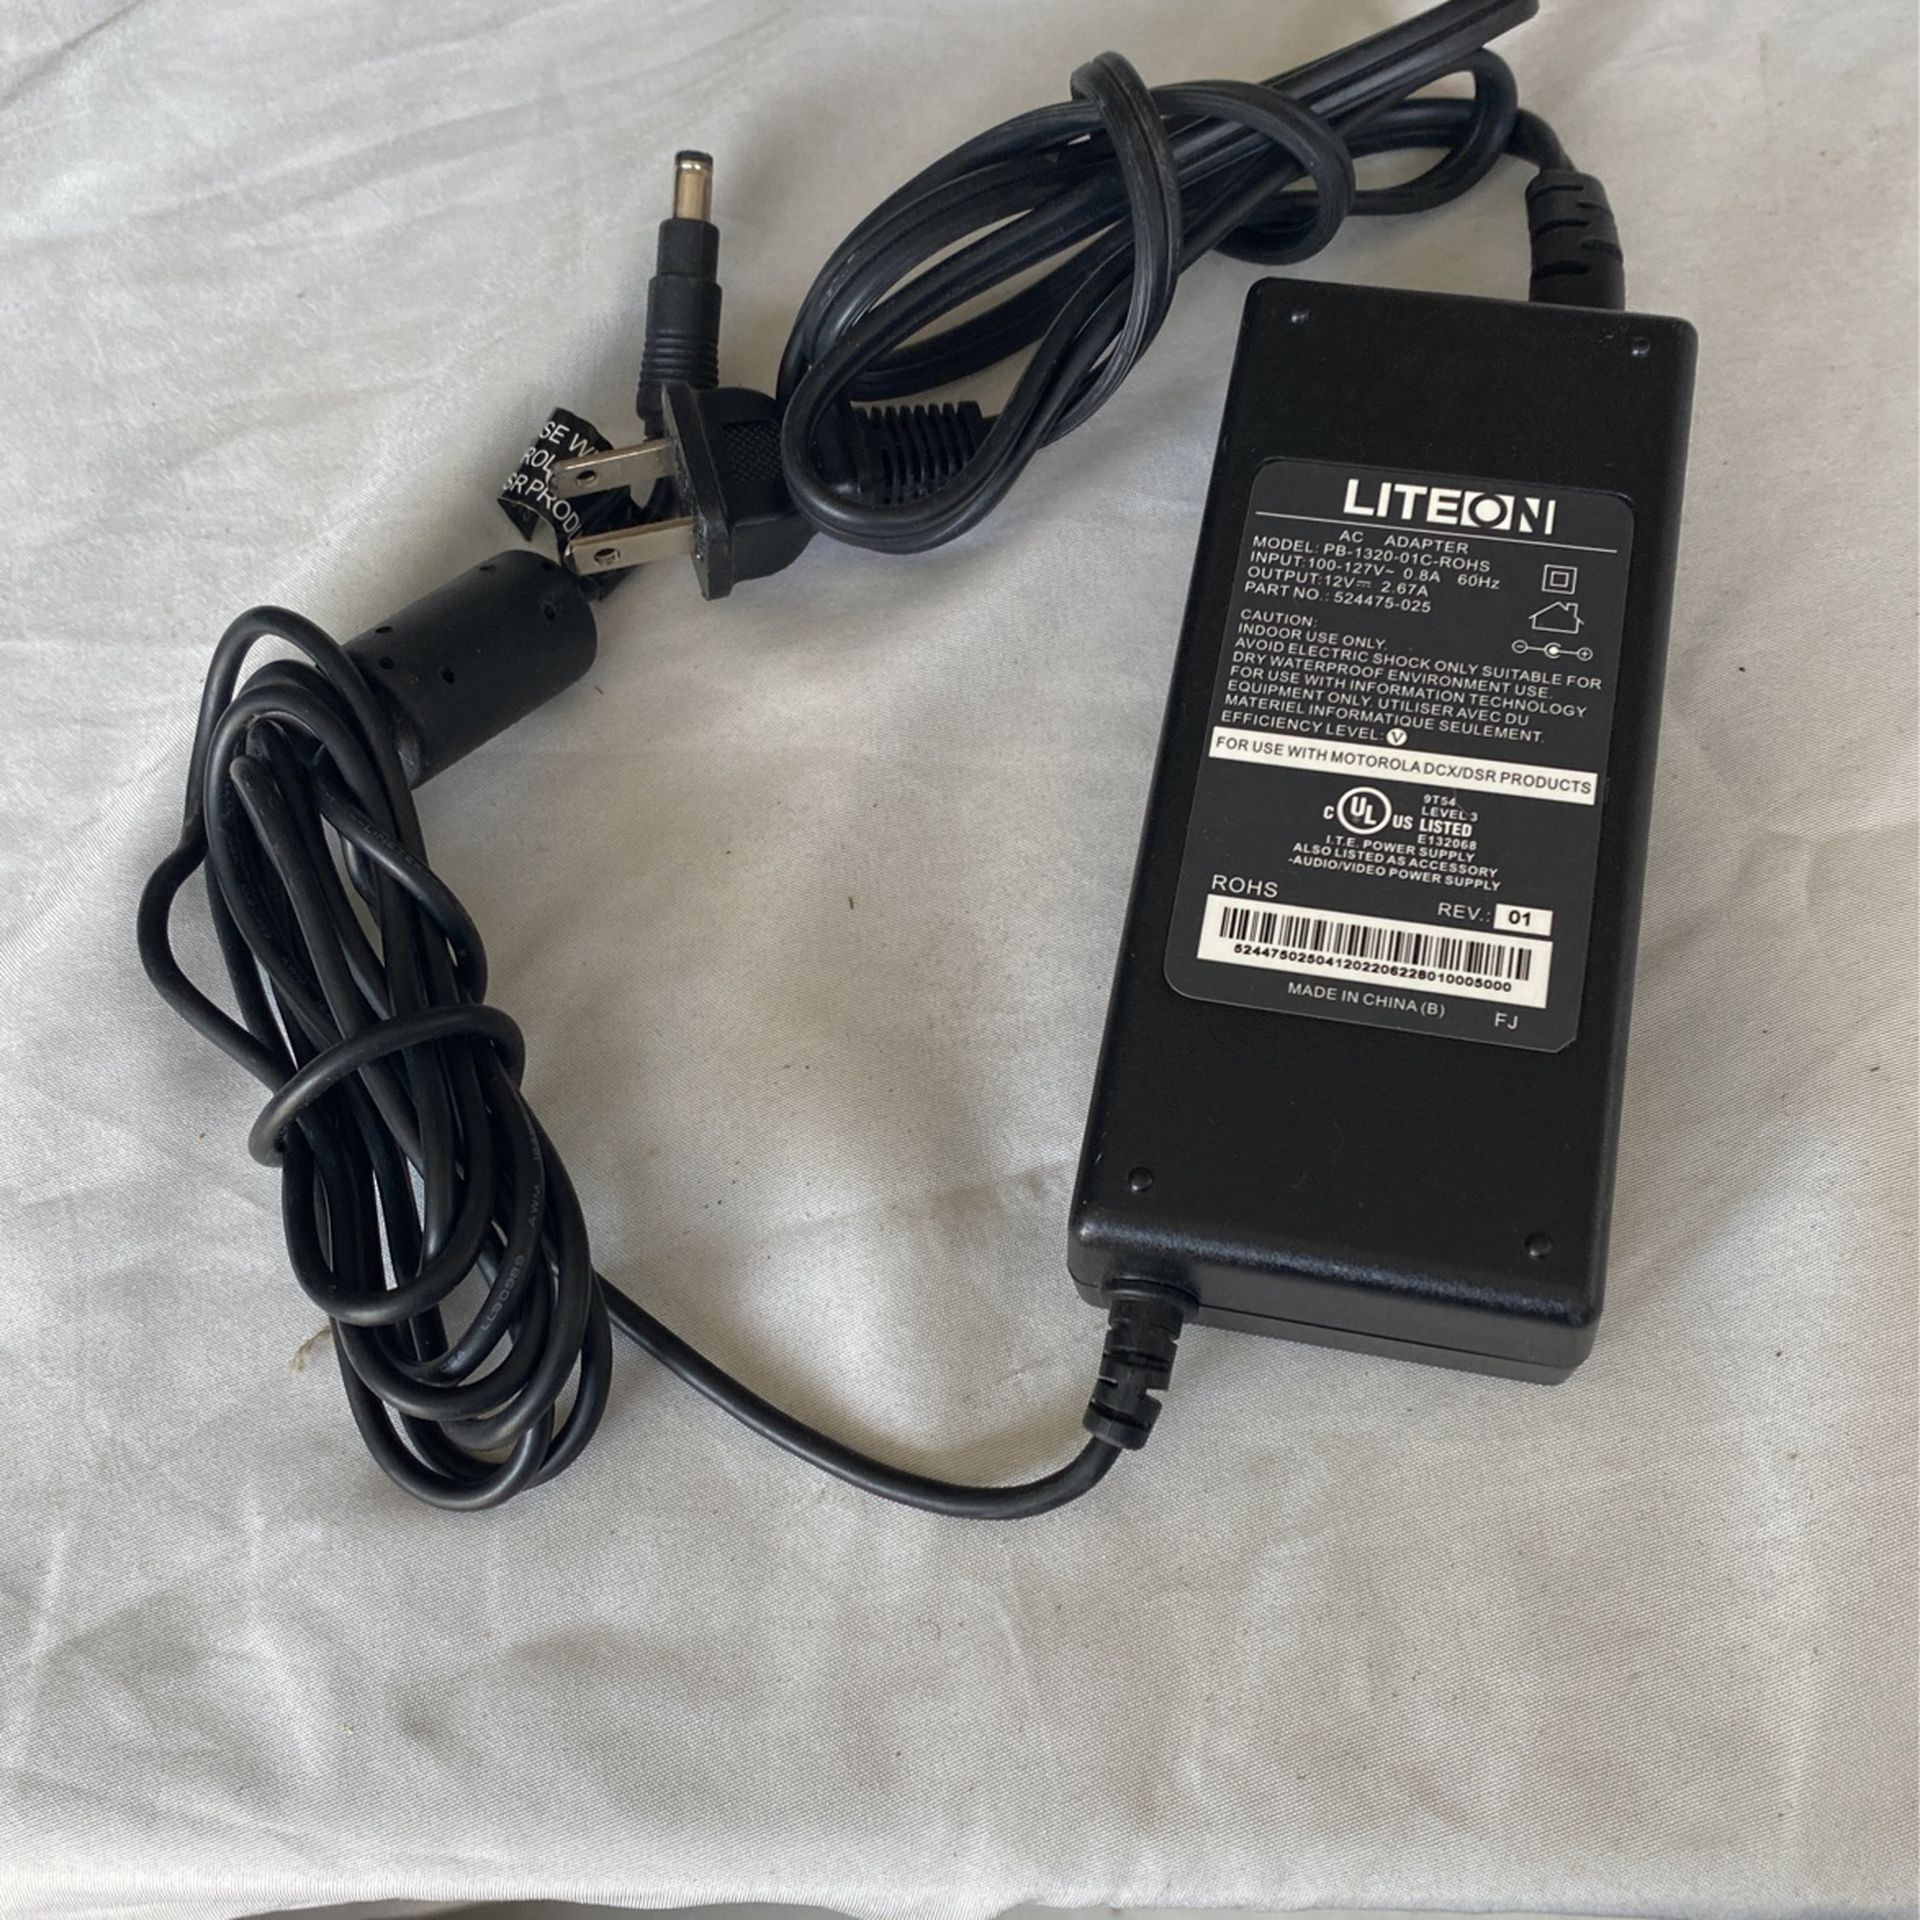  Liteon AC Adapter PB-1320-01C-ROHS 524475-025 For Motorola DCX/DSR Products